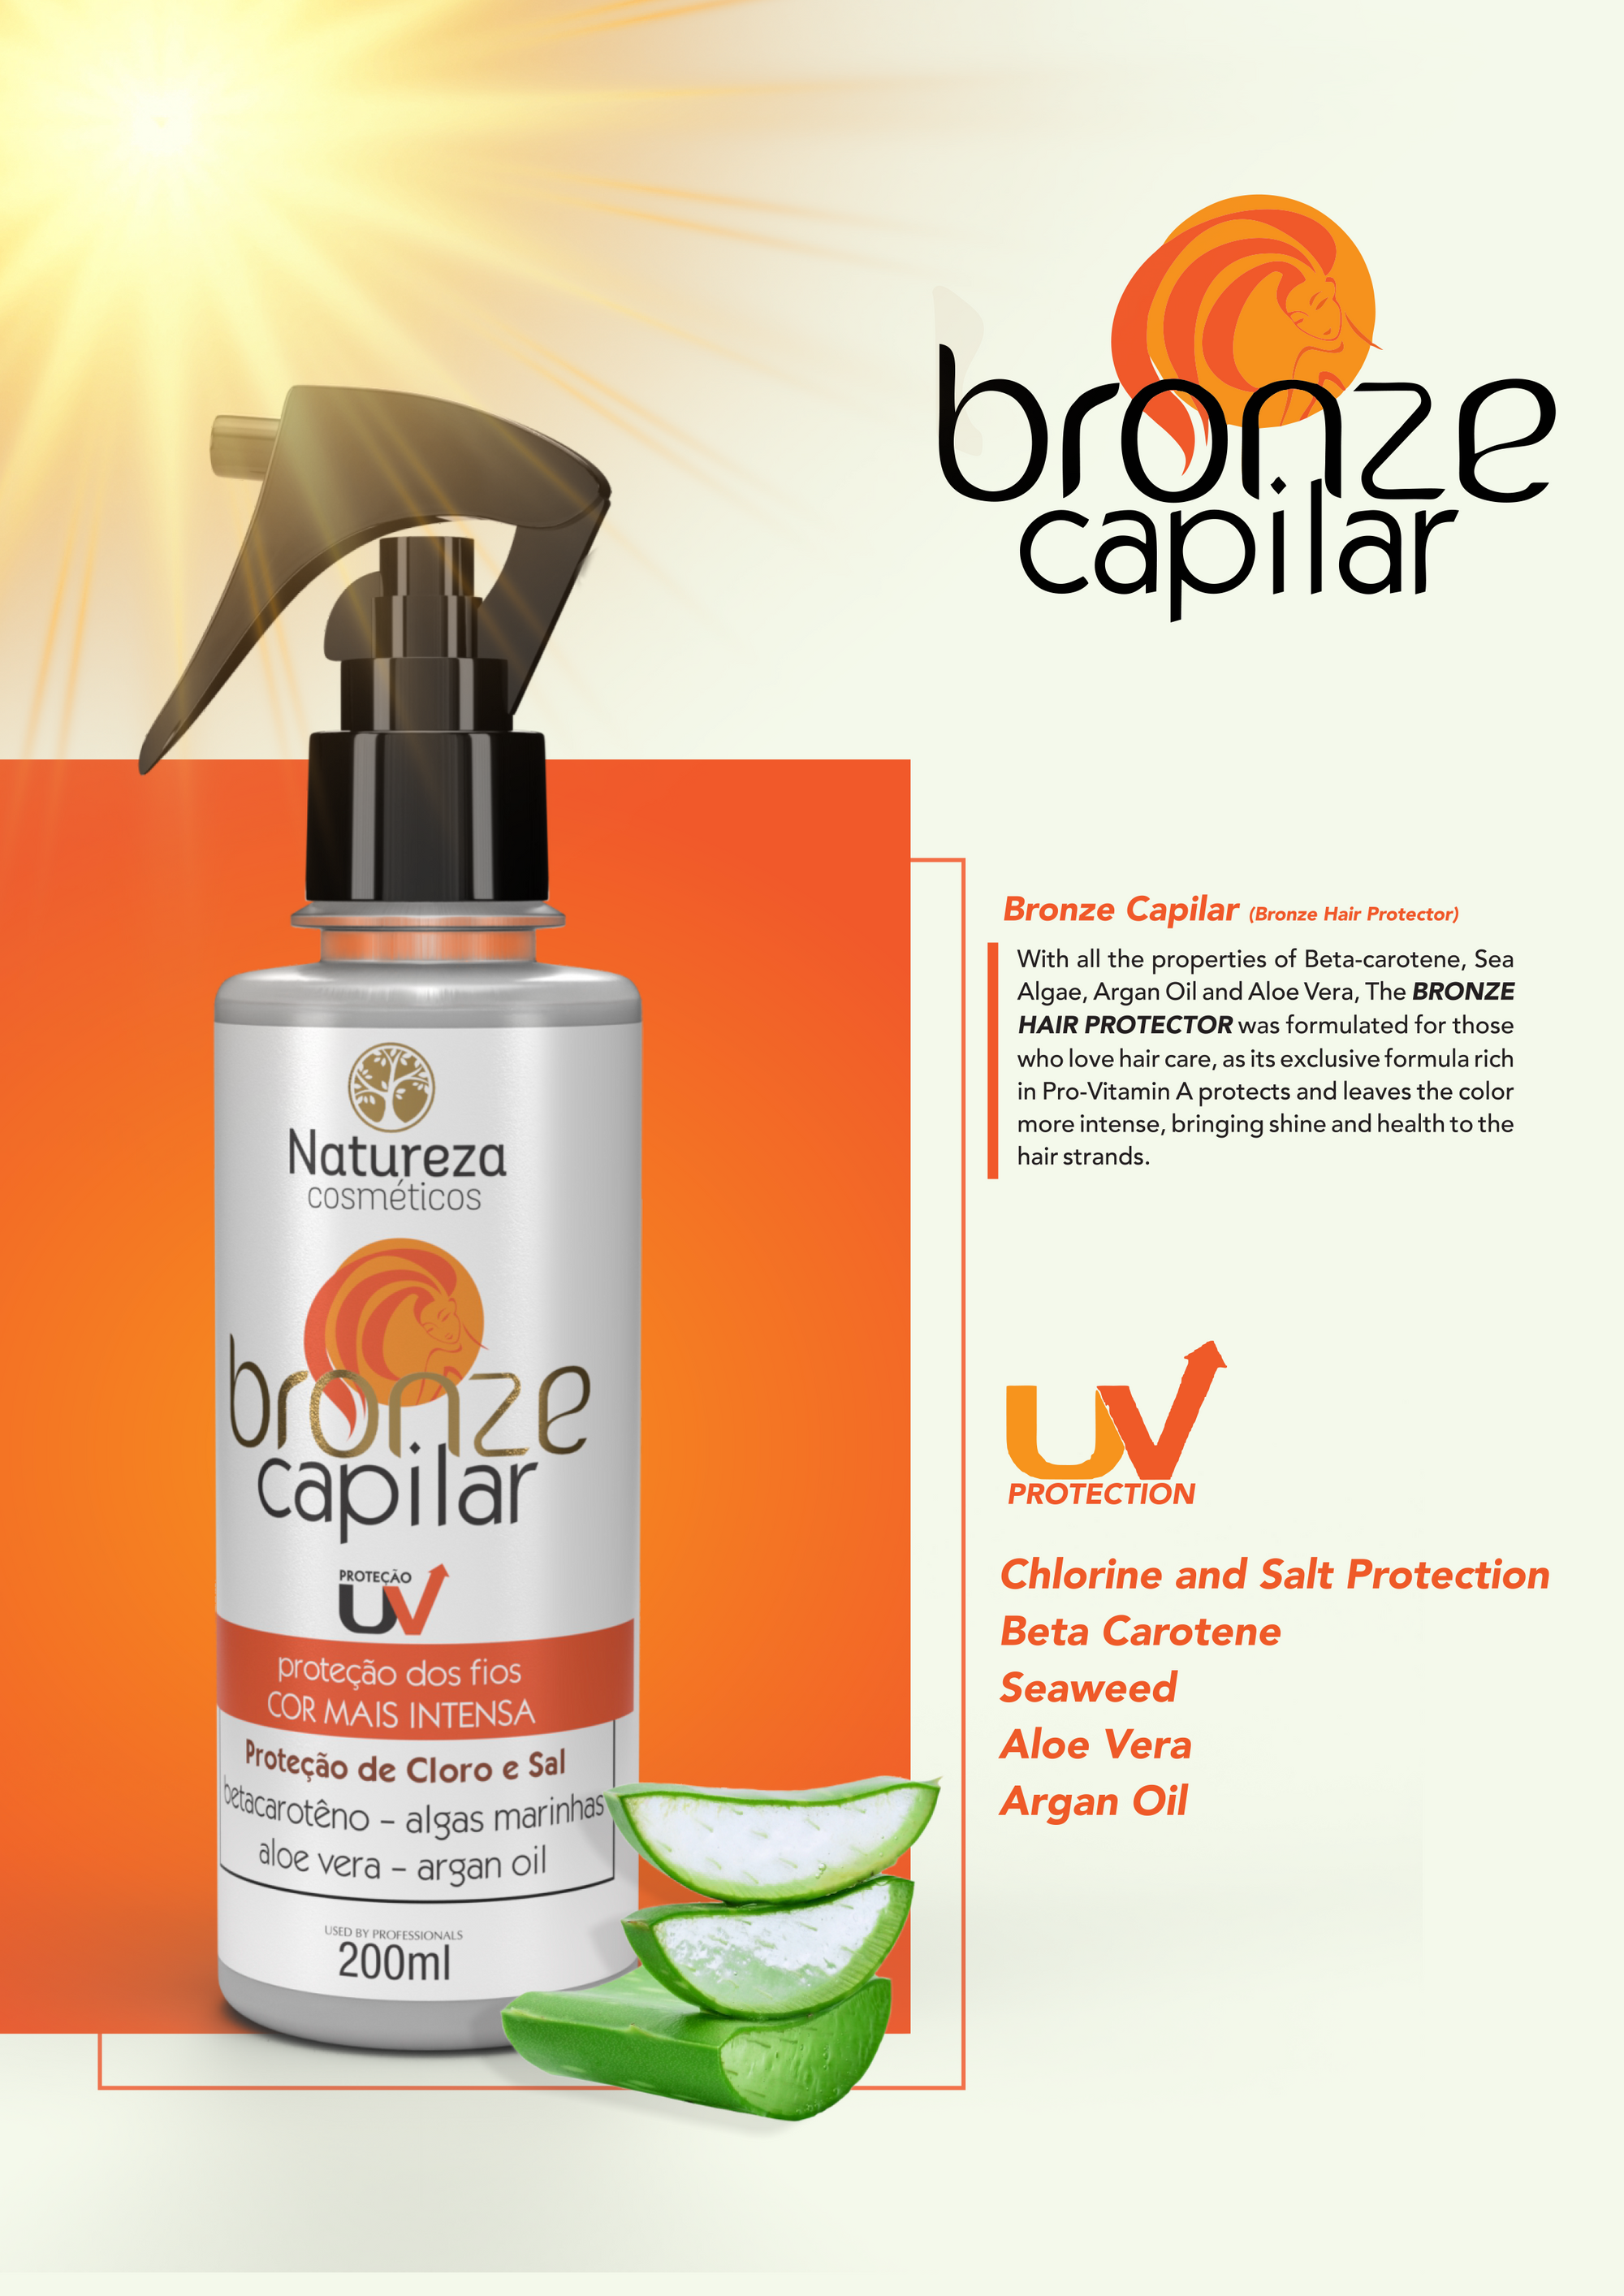 Bronze Capilar UV Protection (Natureza Cosmeticos Bronze Capilar 200ml)